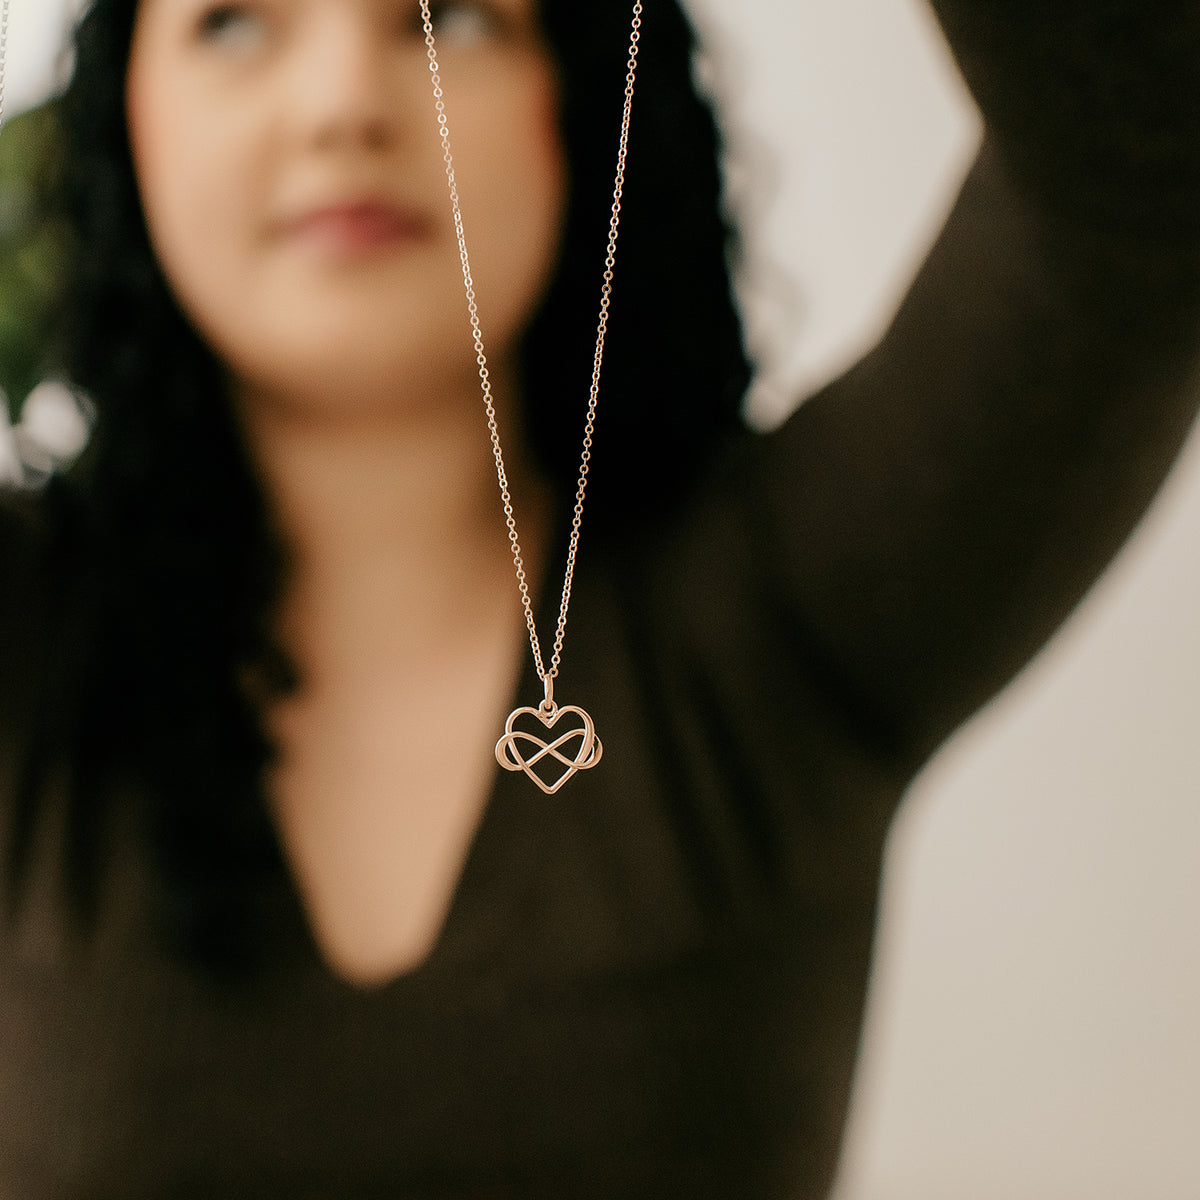 Interlocking Infinity Heart Necklace - Love It Personalized